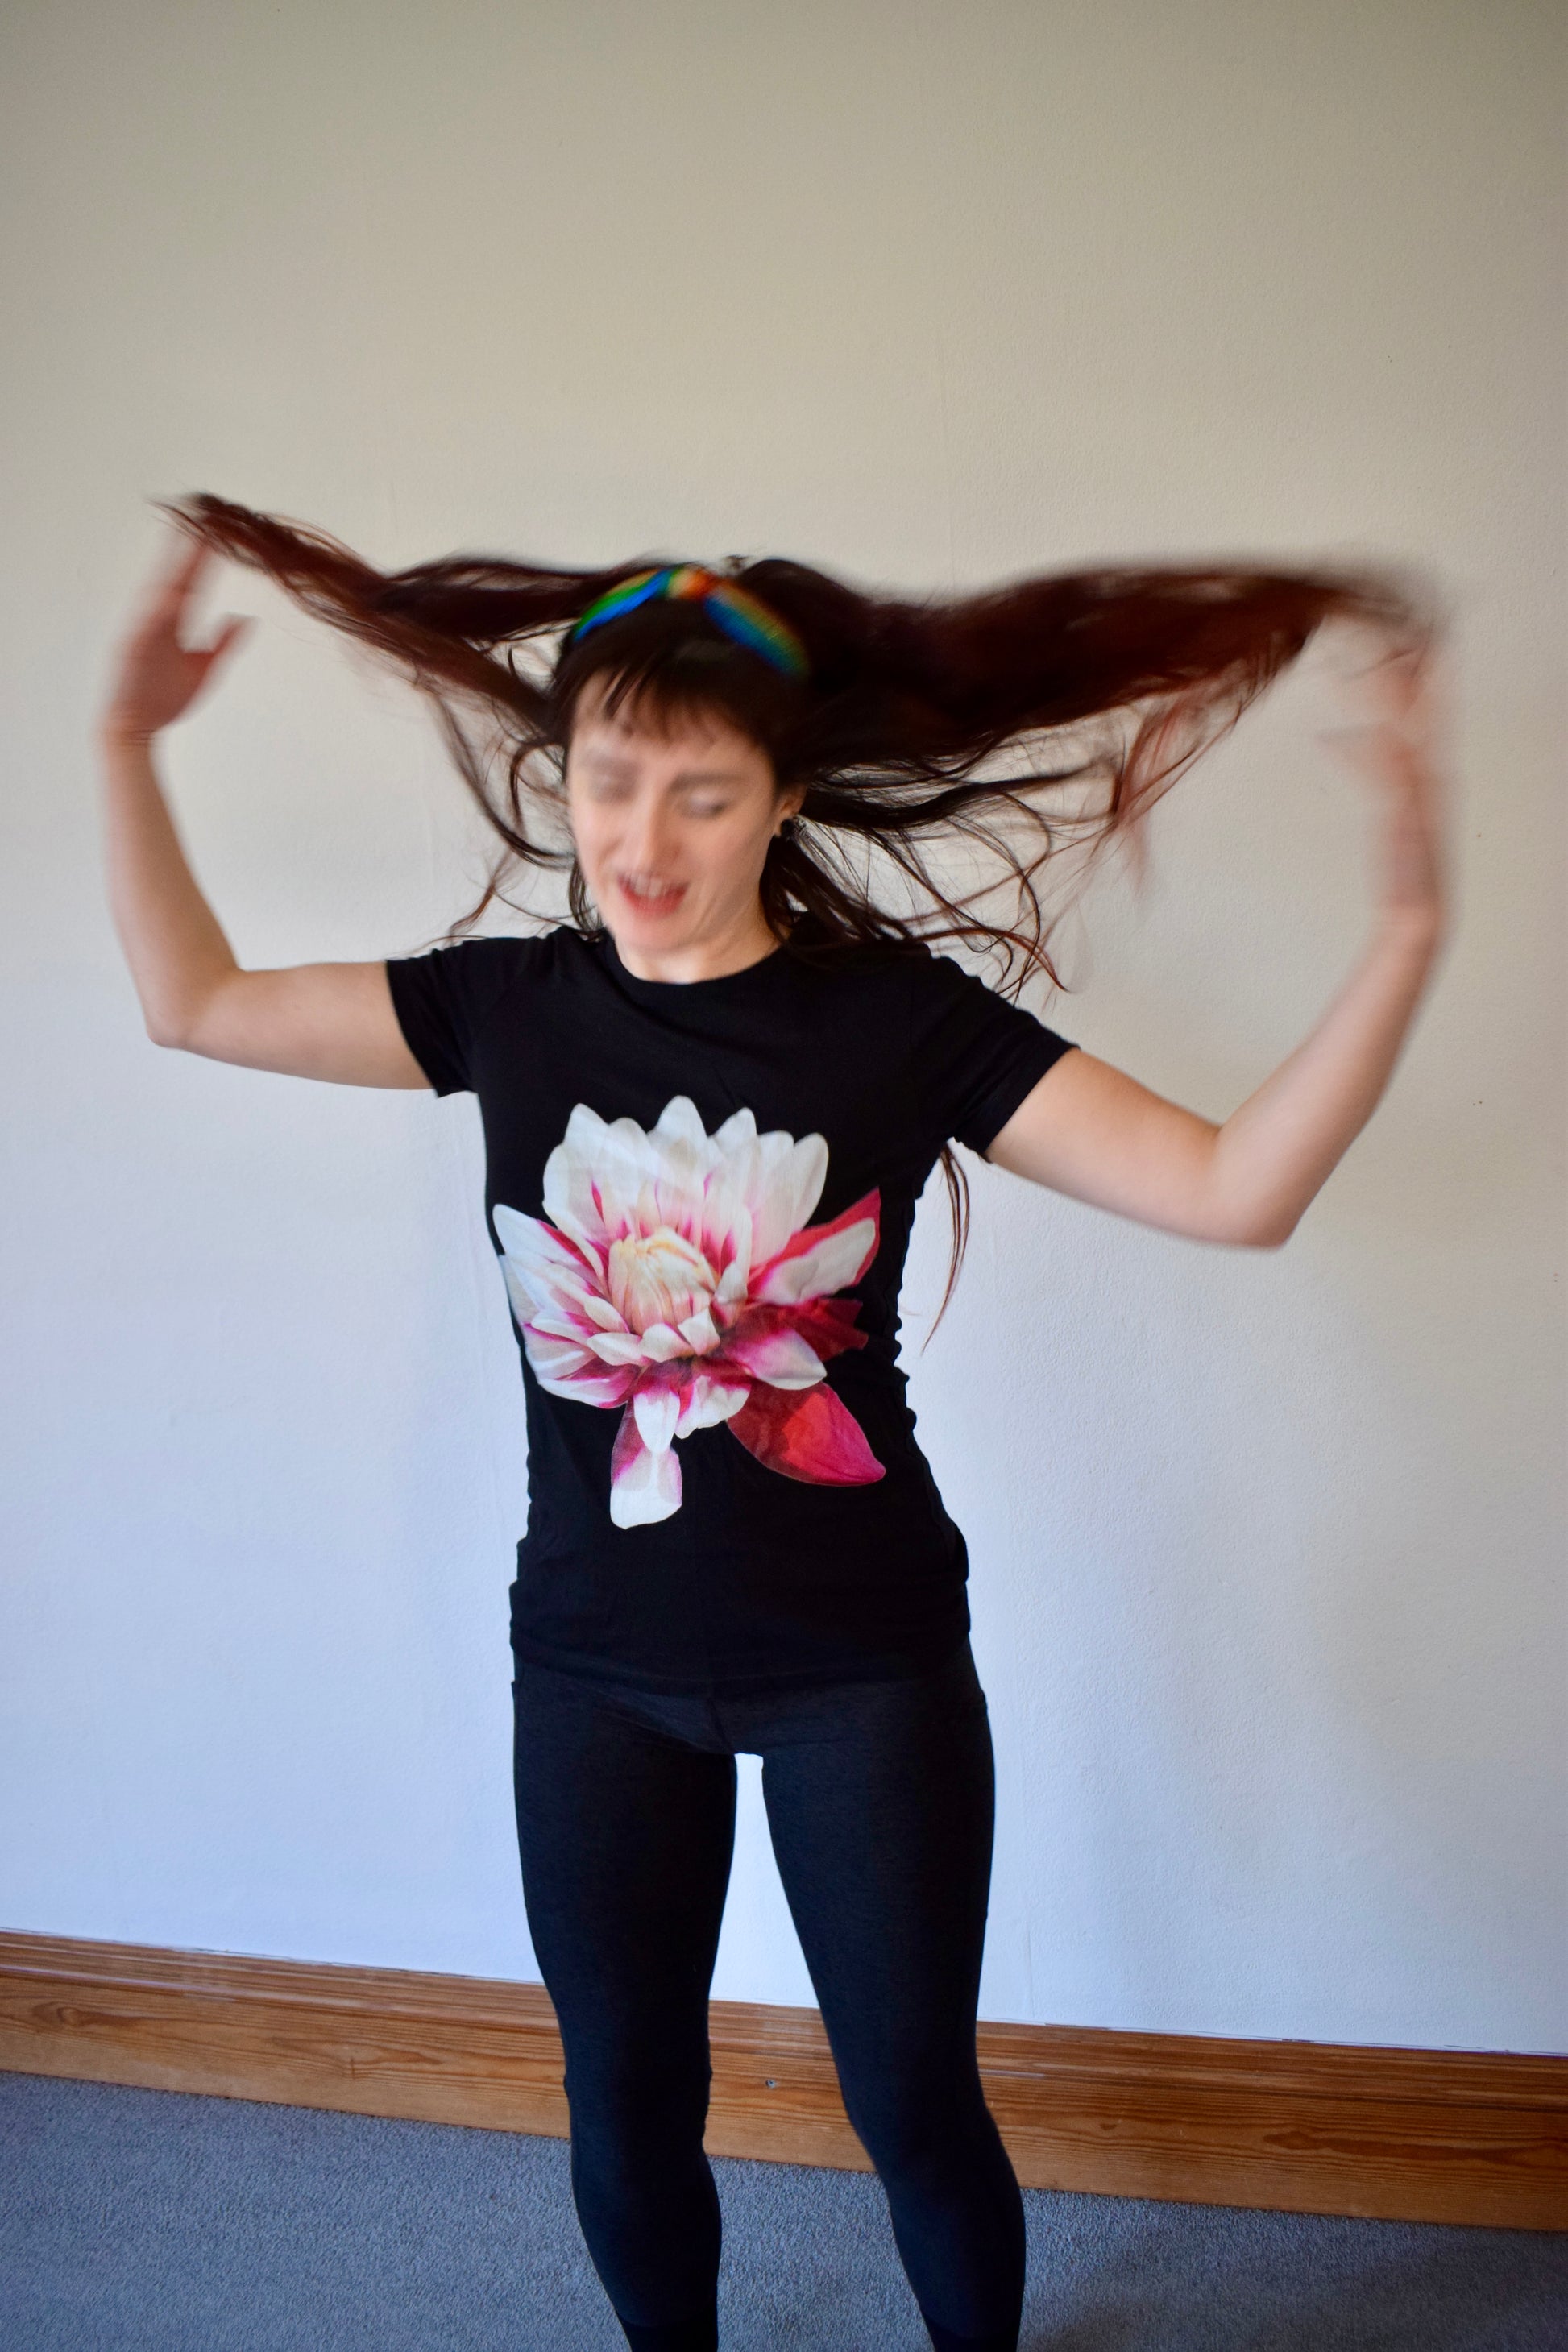 Pink Dahlia Women's T-Shirt - Nature of Flowers